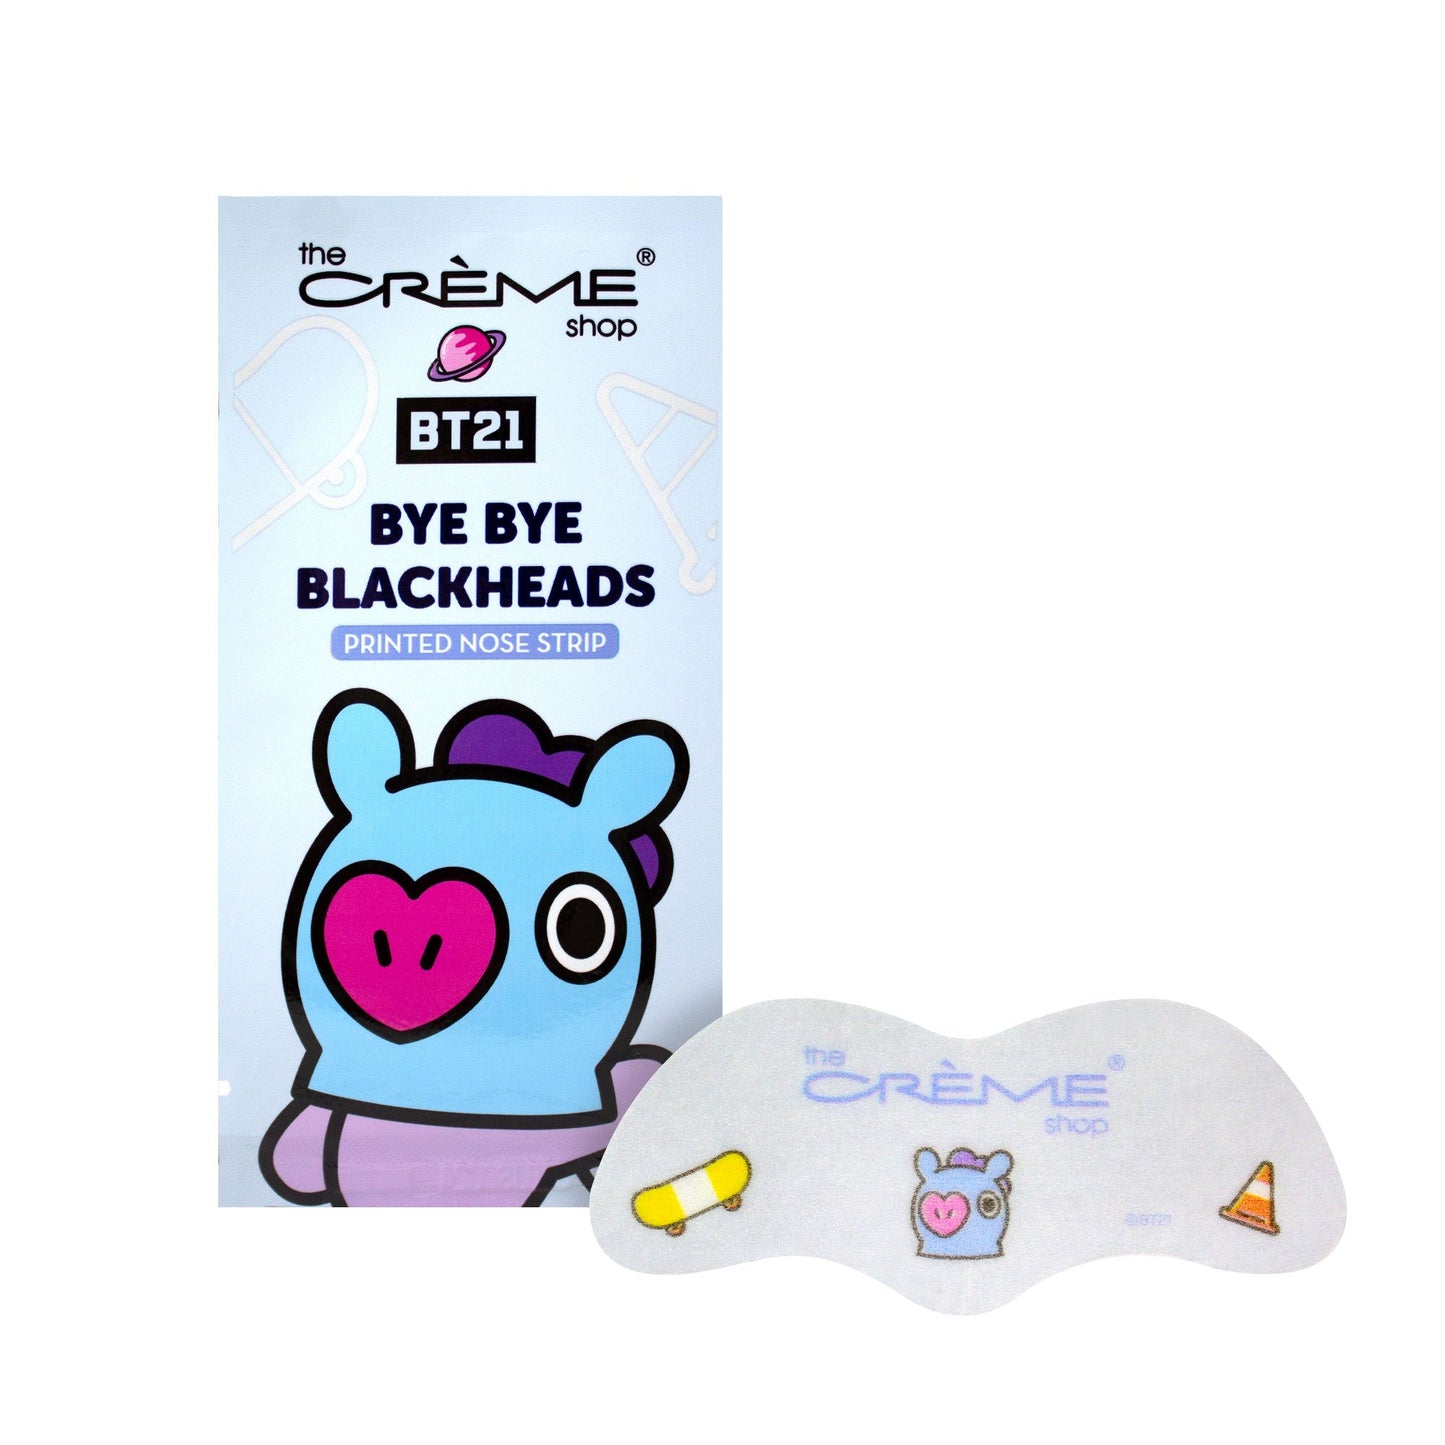 The Crème Shop | BT21: Bye Bye Blackheads - Printed Nose Strips (Set of 8) Blackheads Removers The Crème Shop x BT21 